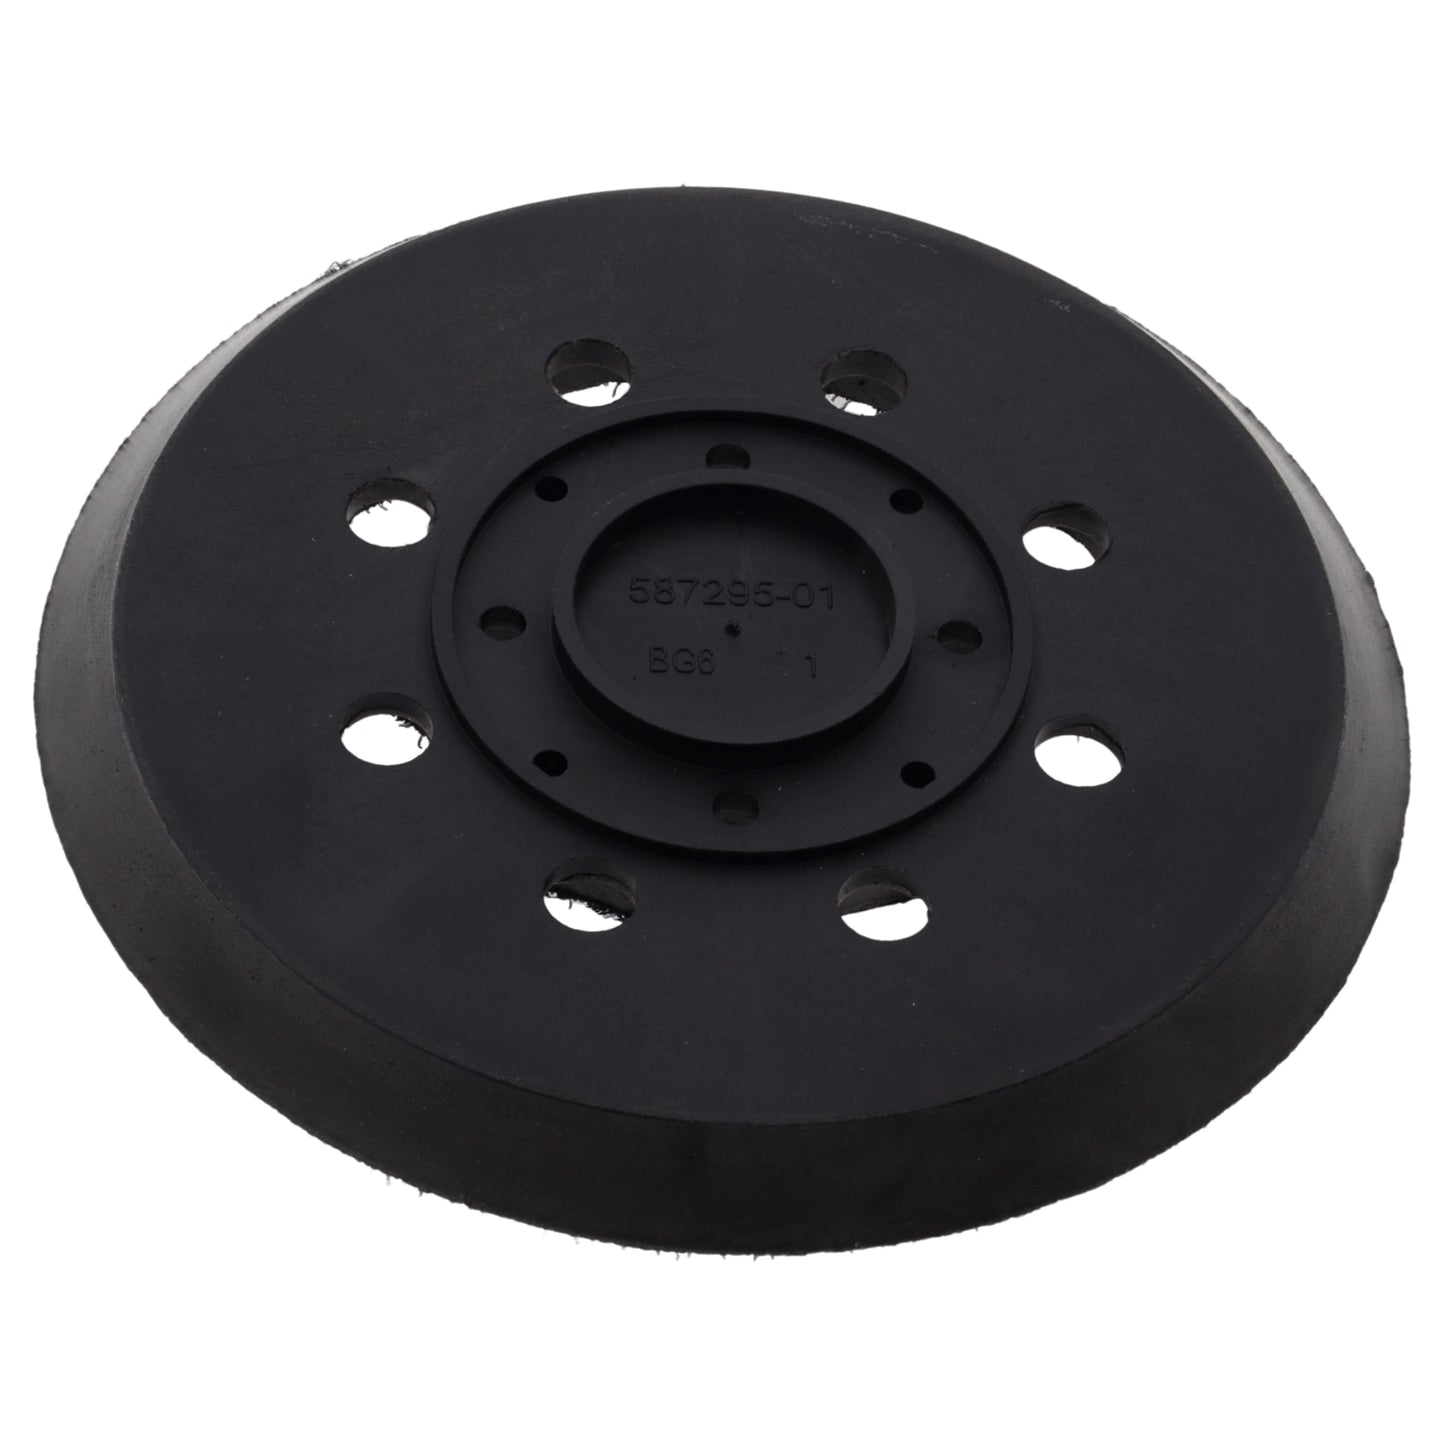 Black & Decker disco piattello base rotonda levigatrice KA198 RO400G RO410